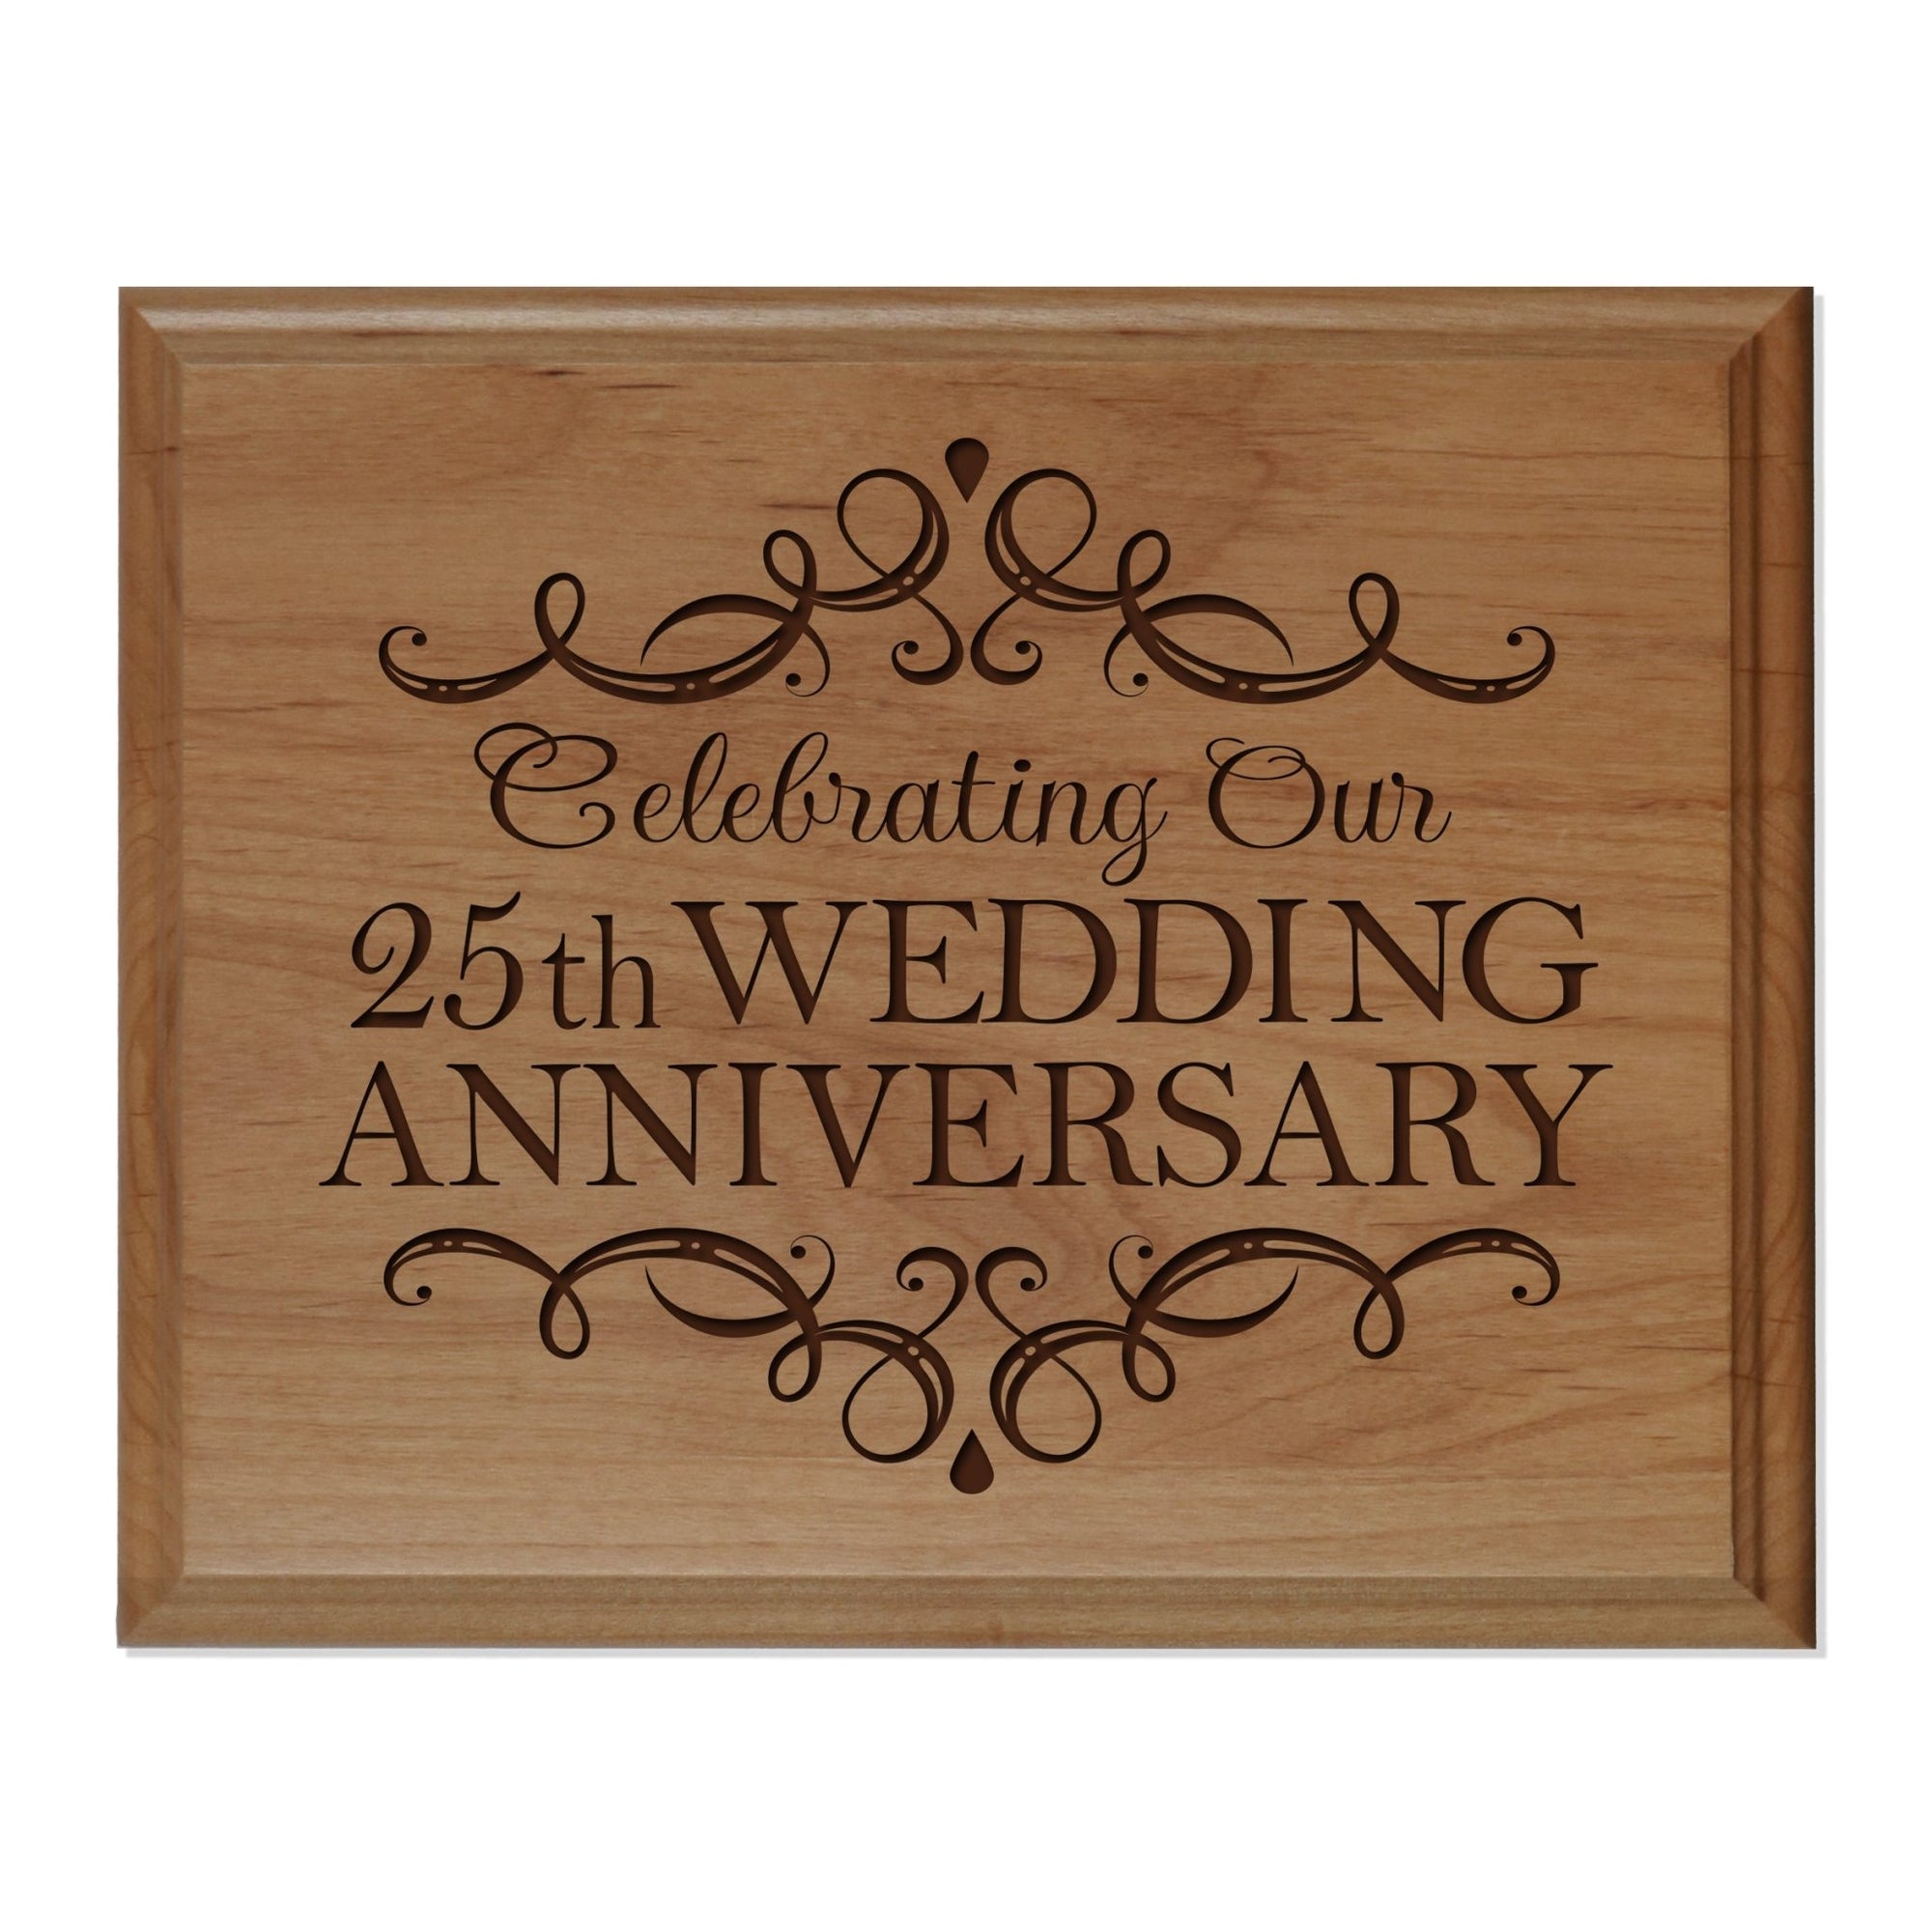 25th Wedding Anniversary Wall Plaque - Celebrating - LifeSong Milestones